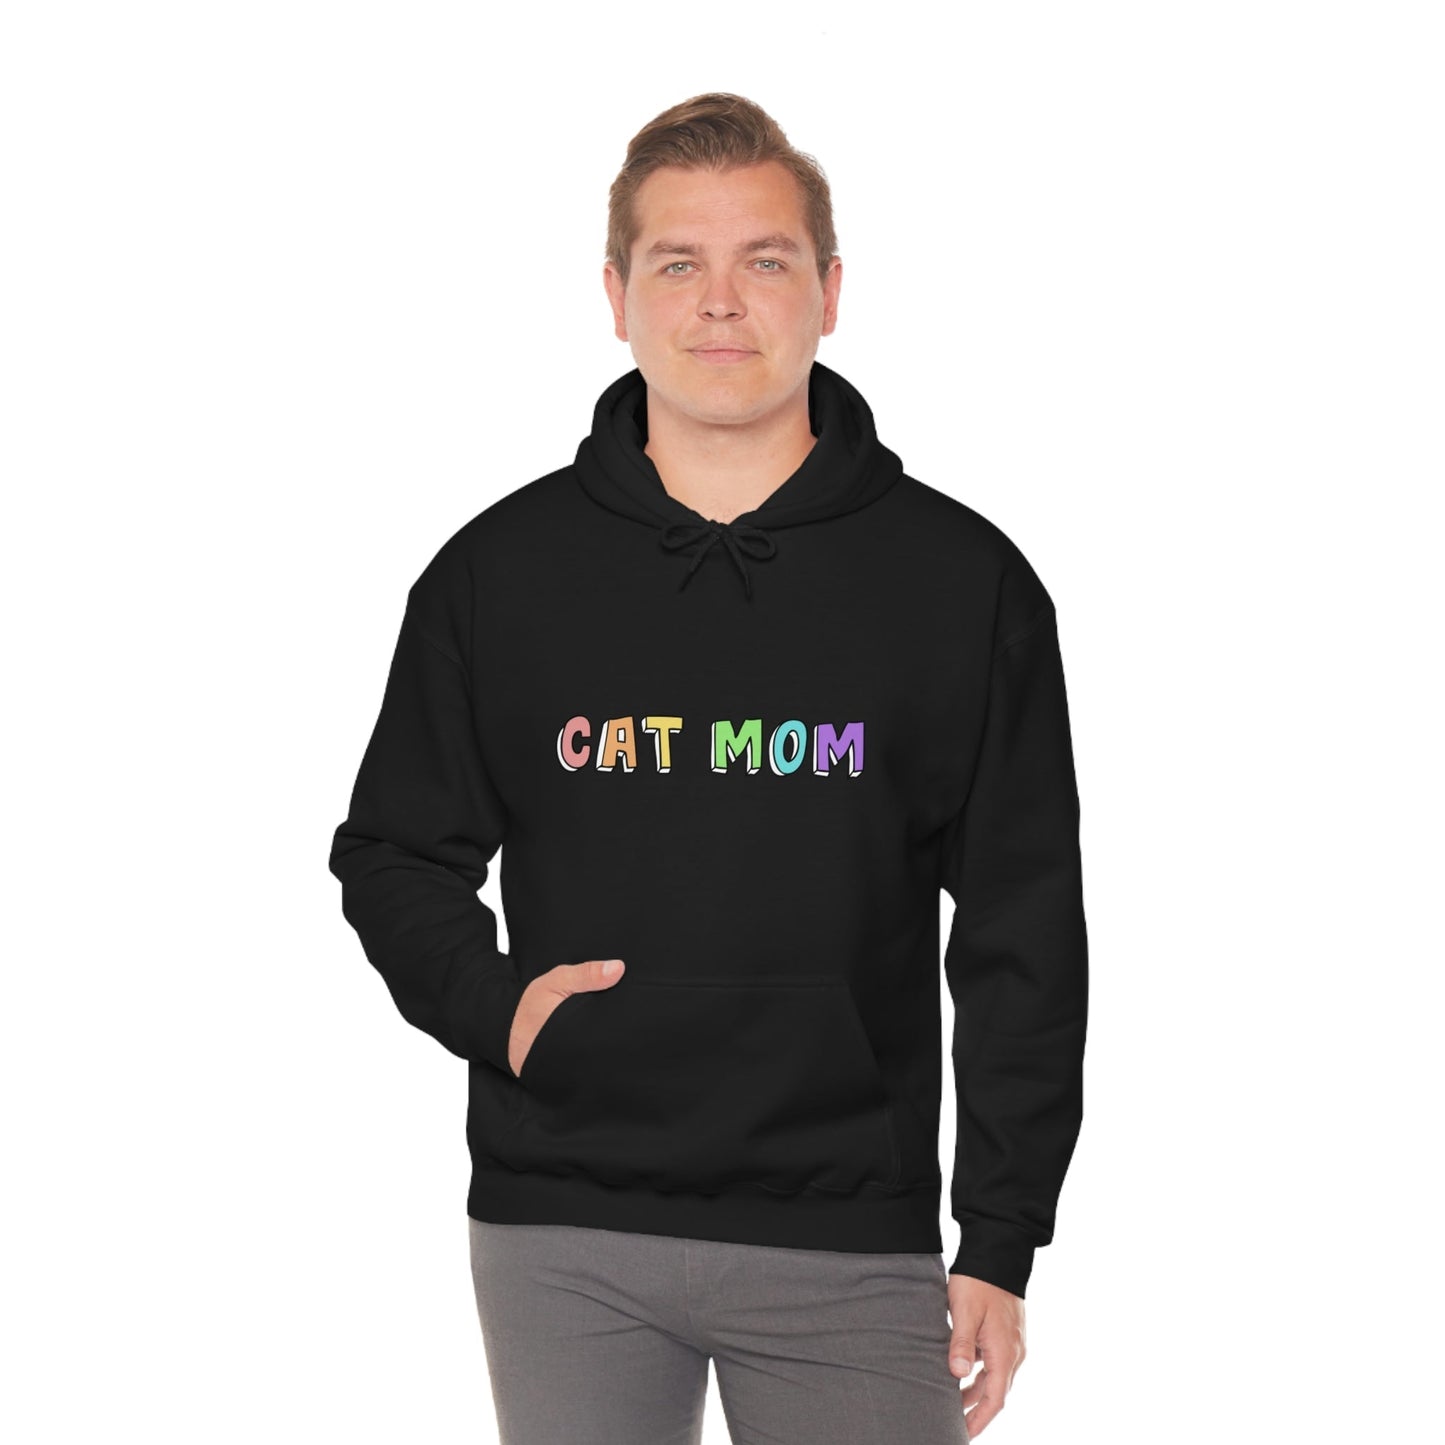 Cat Mom | Hooded Sweatshirt - Detezi Designs-56689844305905018753